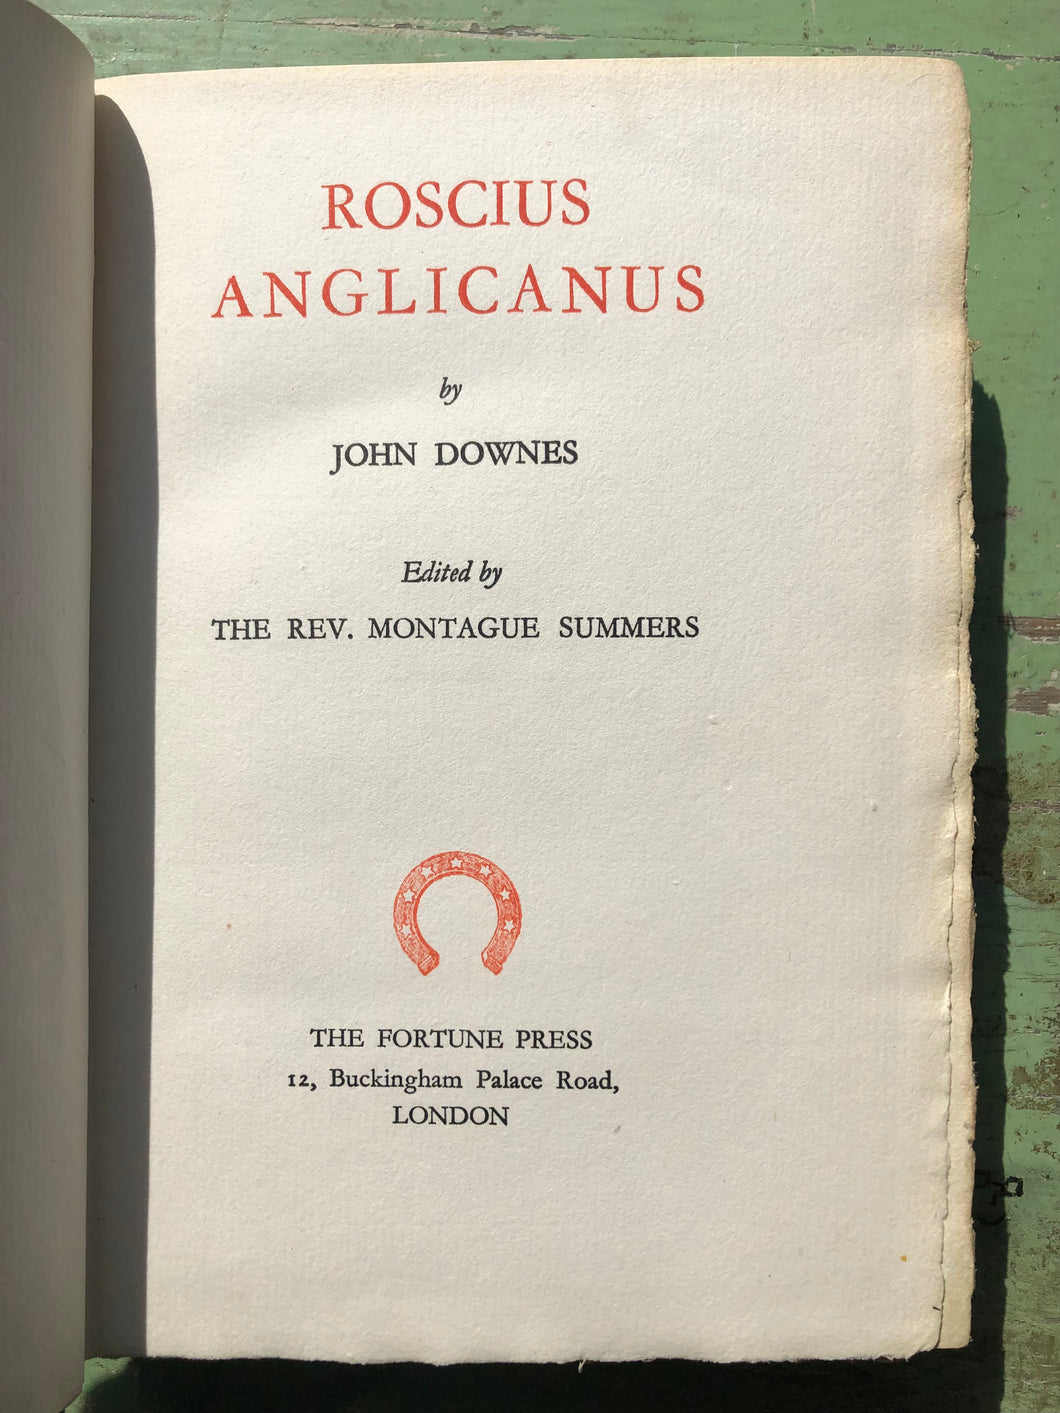 Roscius Anglicanus by John Downes